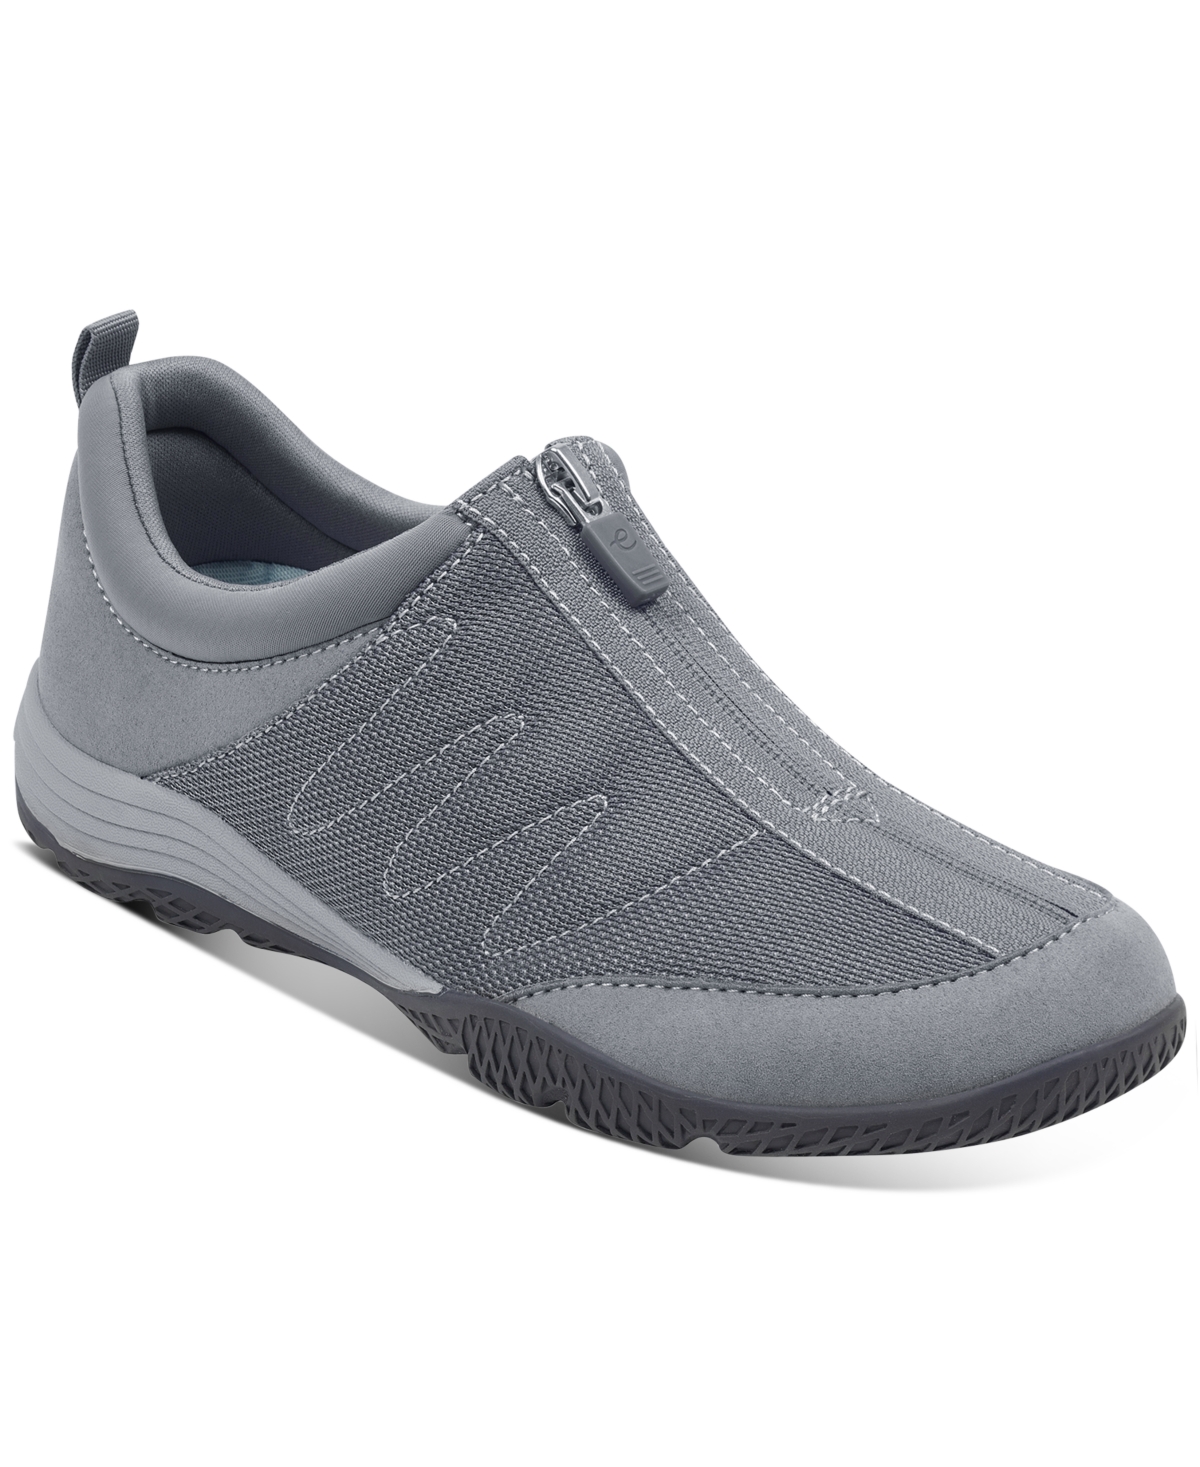 Women's Bestrong Round Toe Casual Sneakers - Medium Gray